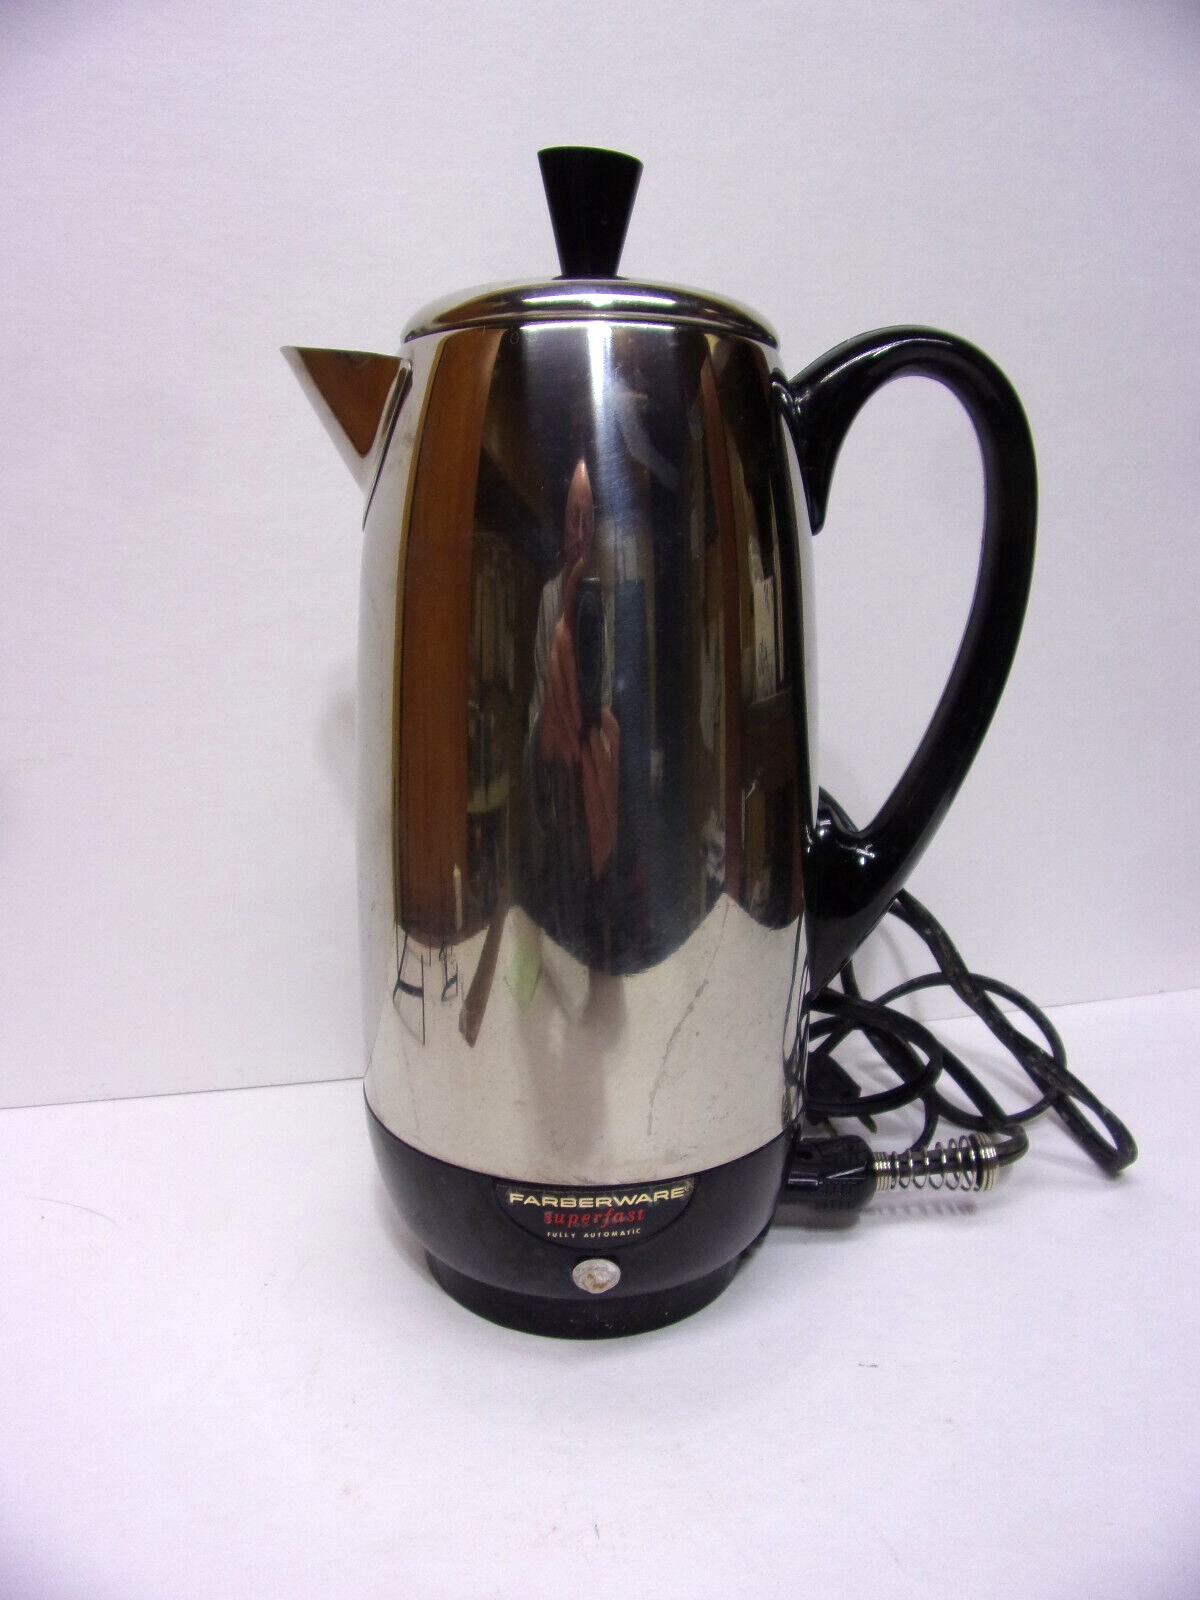 Farberware SuperFast 12-Cup Percolator Coffee Pot 364B for Sale